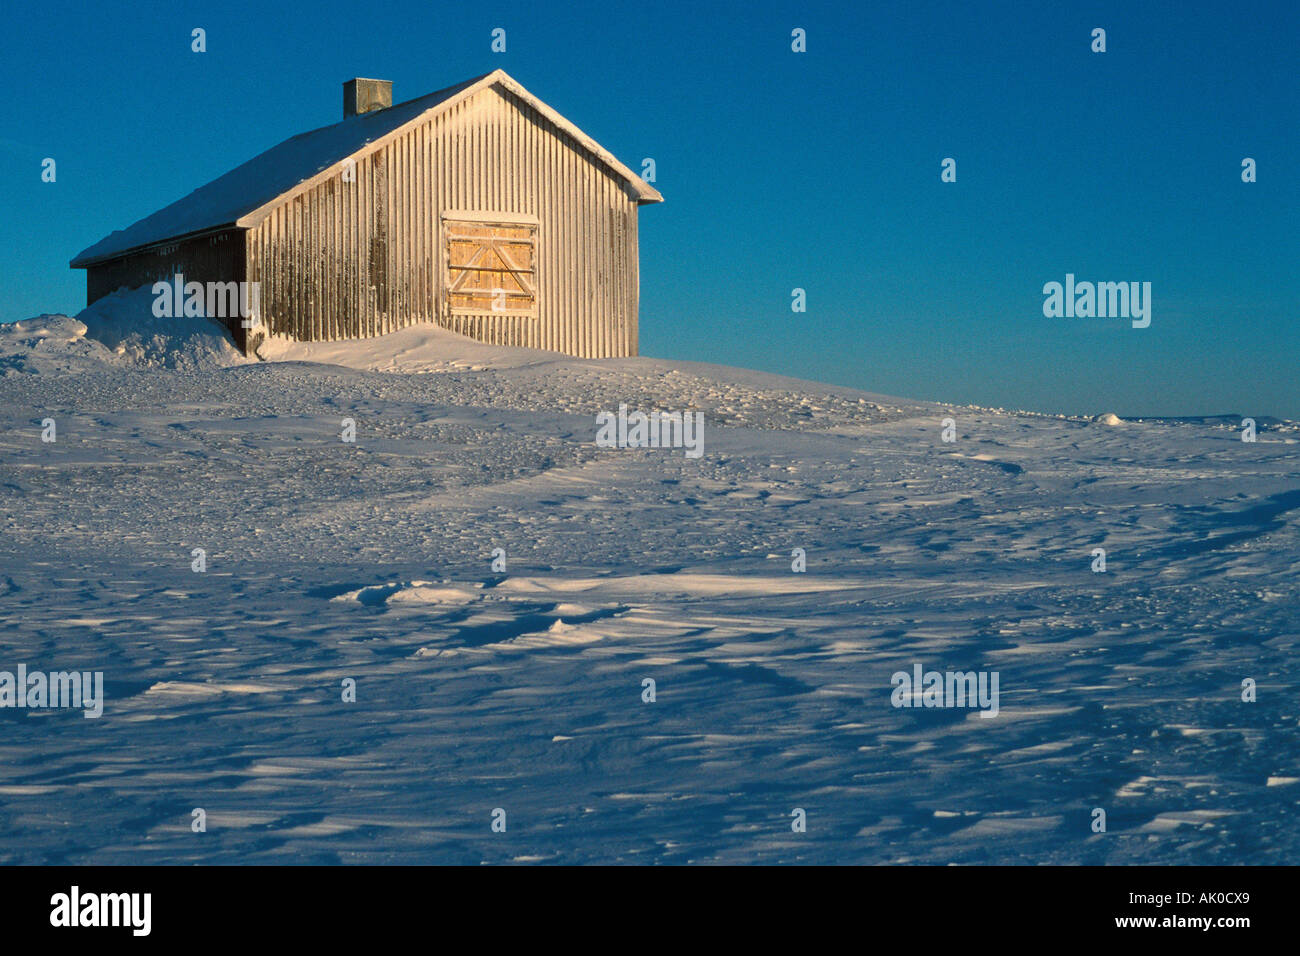 Casa in inverno / Haus im inverno Foto Stock